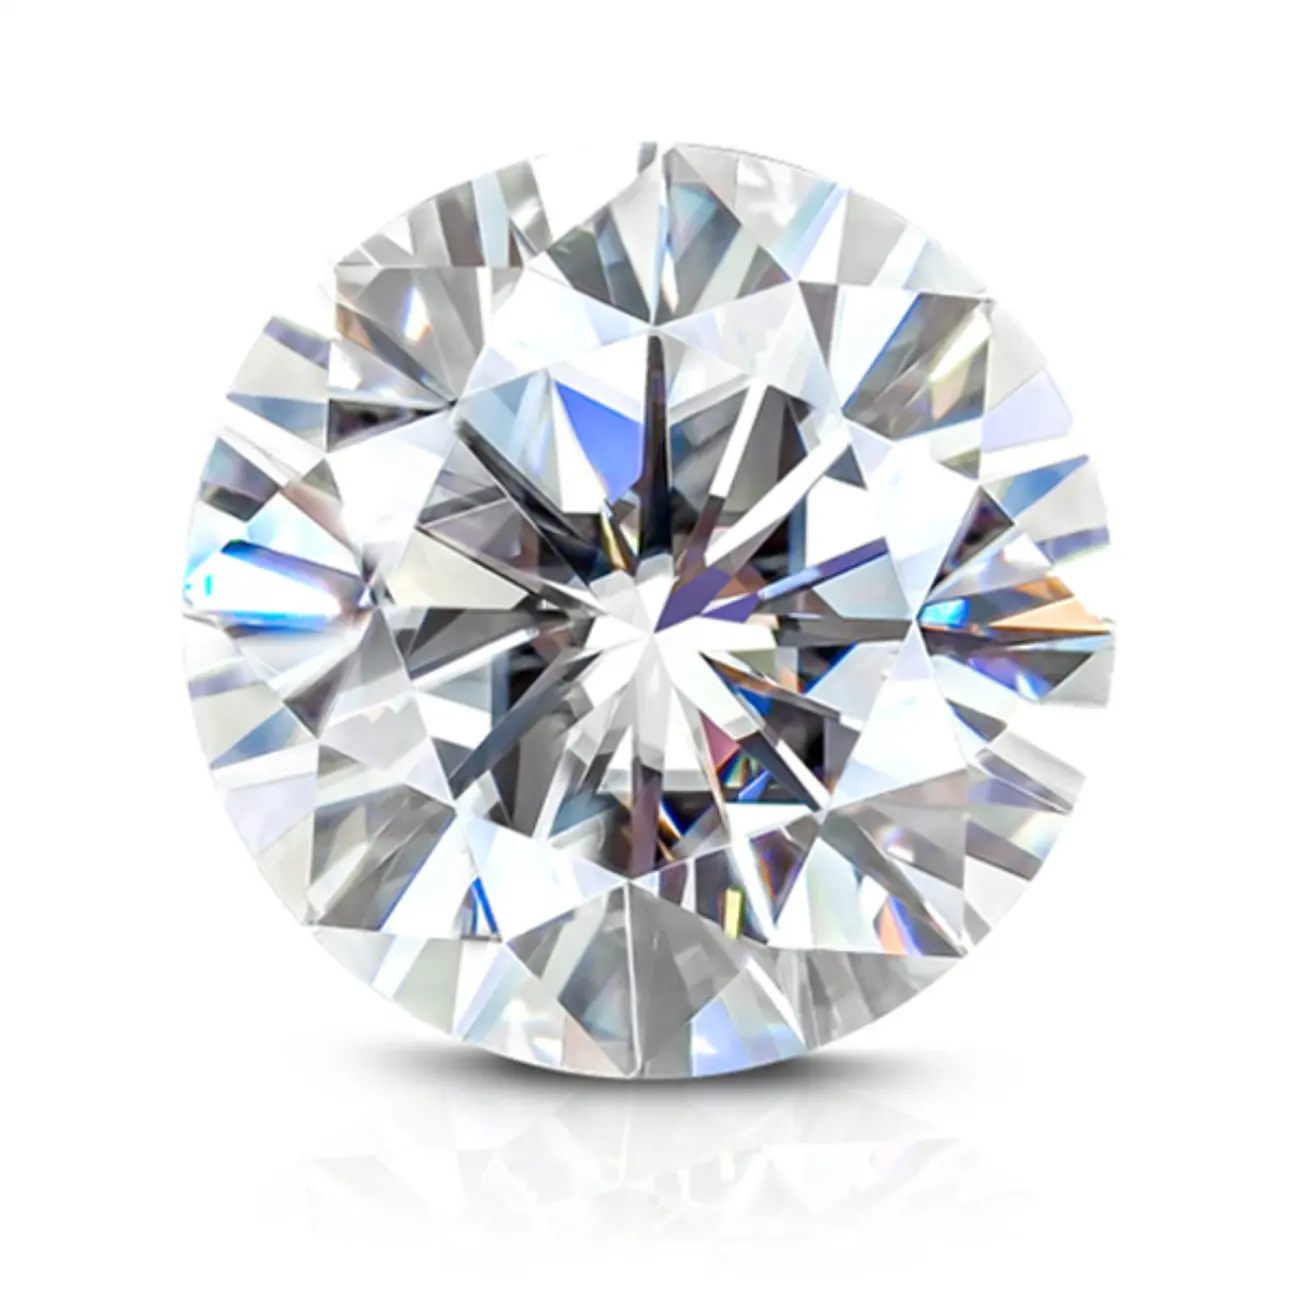 DEF color VVS1 clarity moissanite diamond price per carat moissanite loose stones 8 heart and arrow 10mm 4.0ct